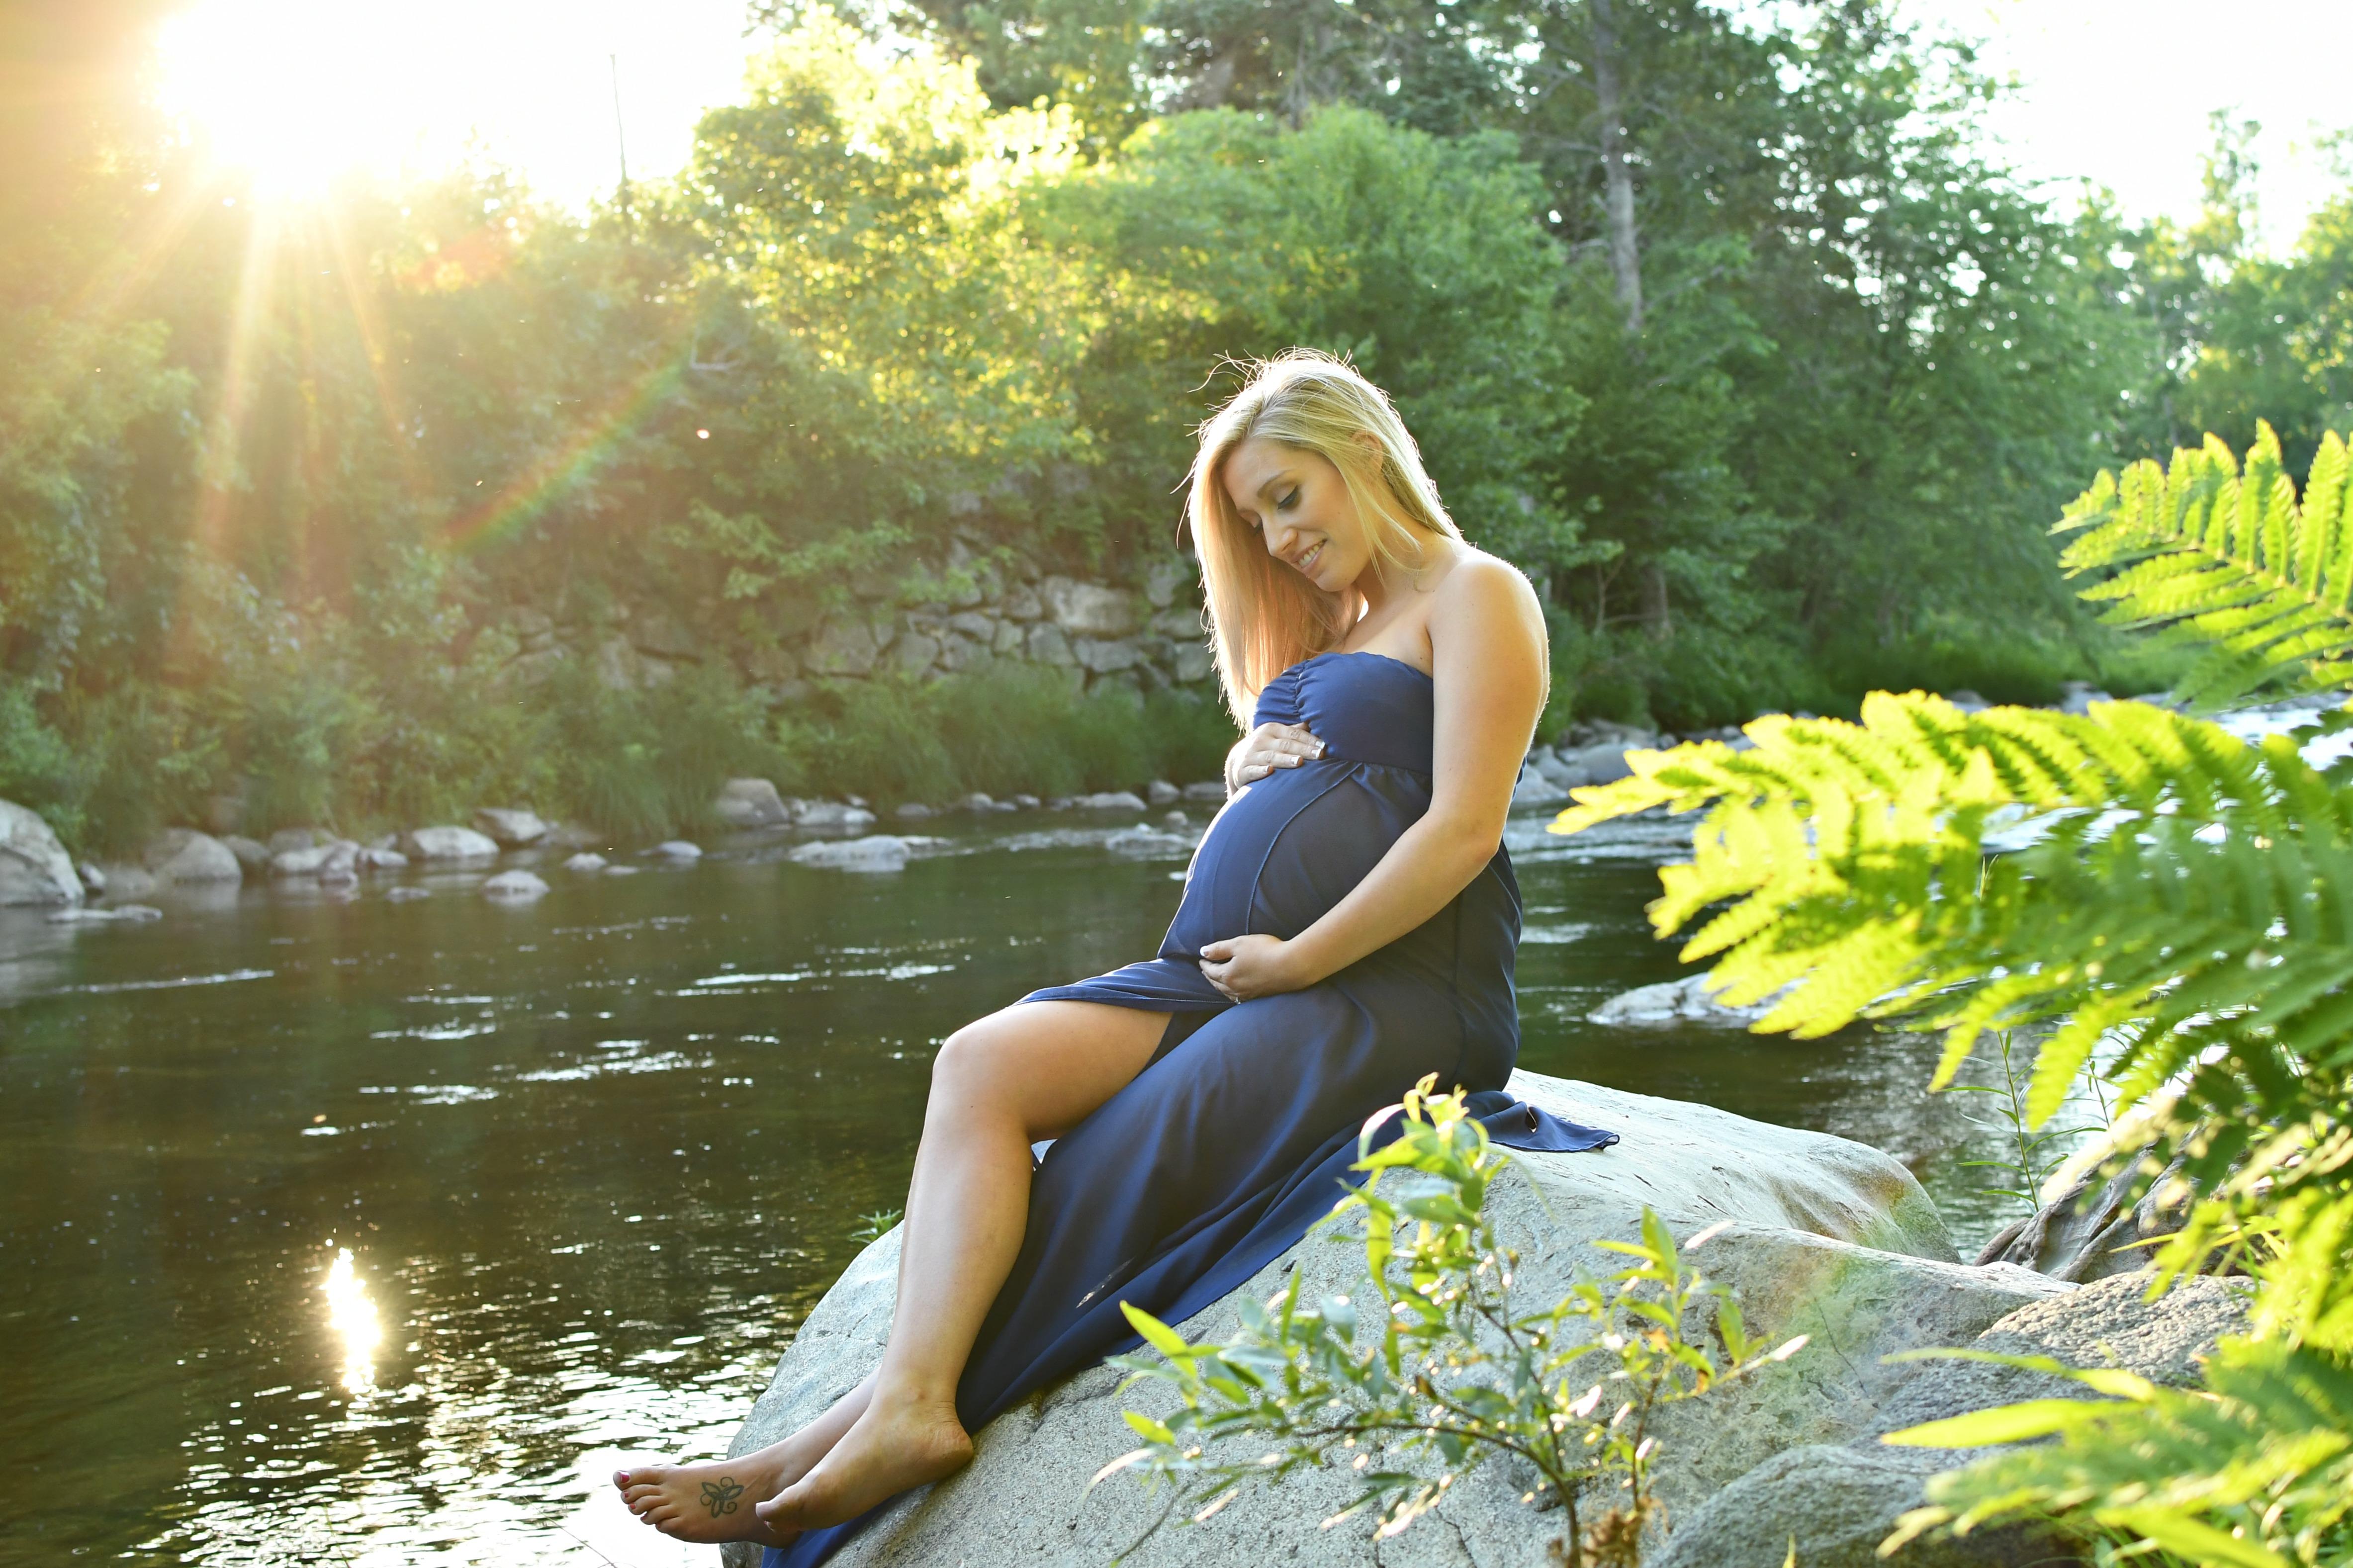 Whitefield Maternity Photographer 1 1 - Portfolio: Maternity